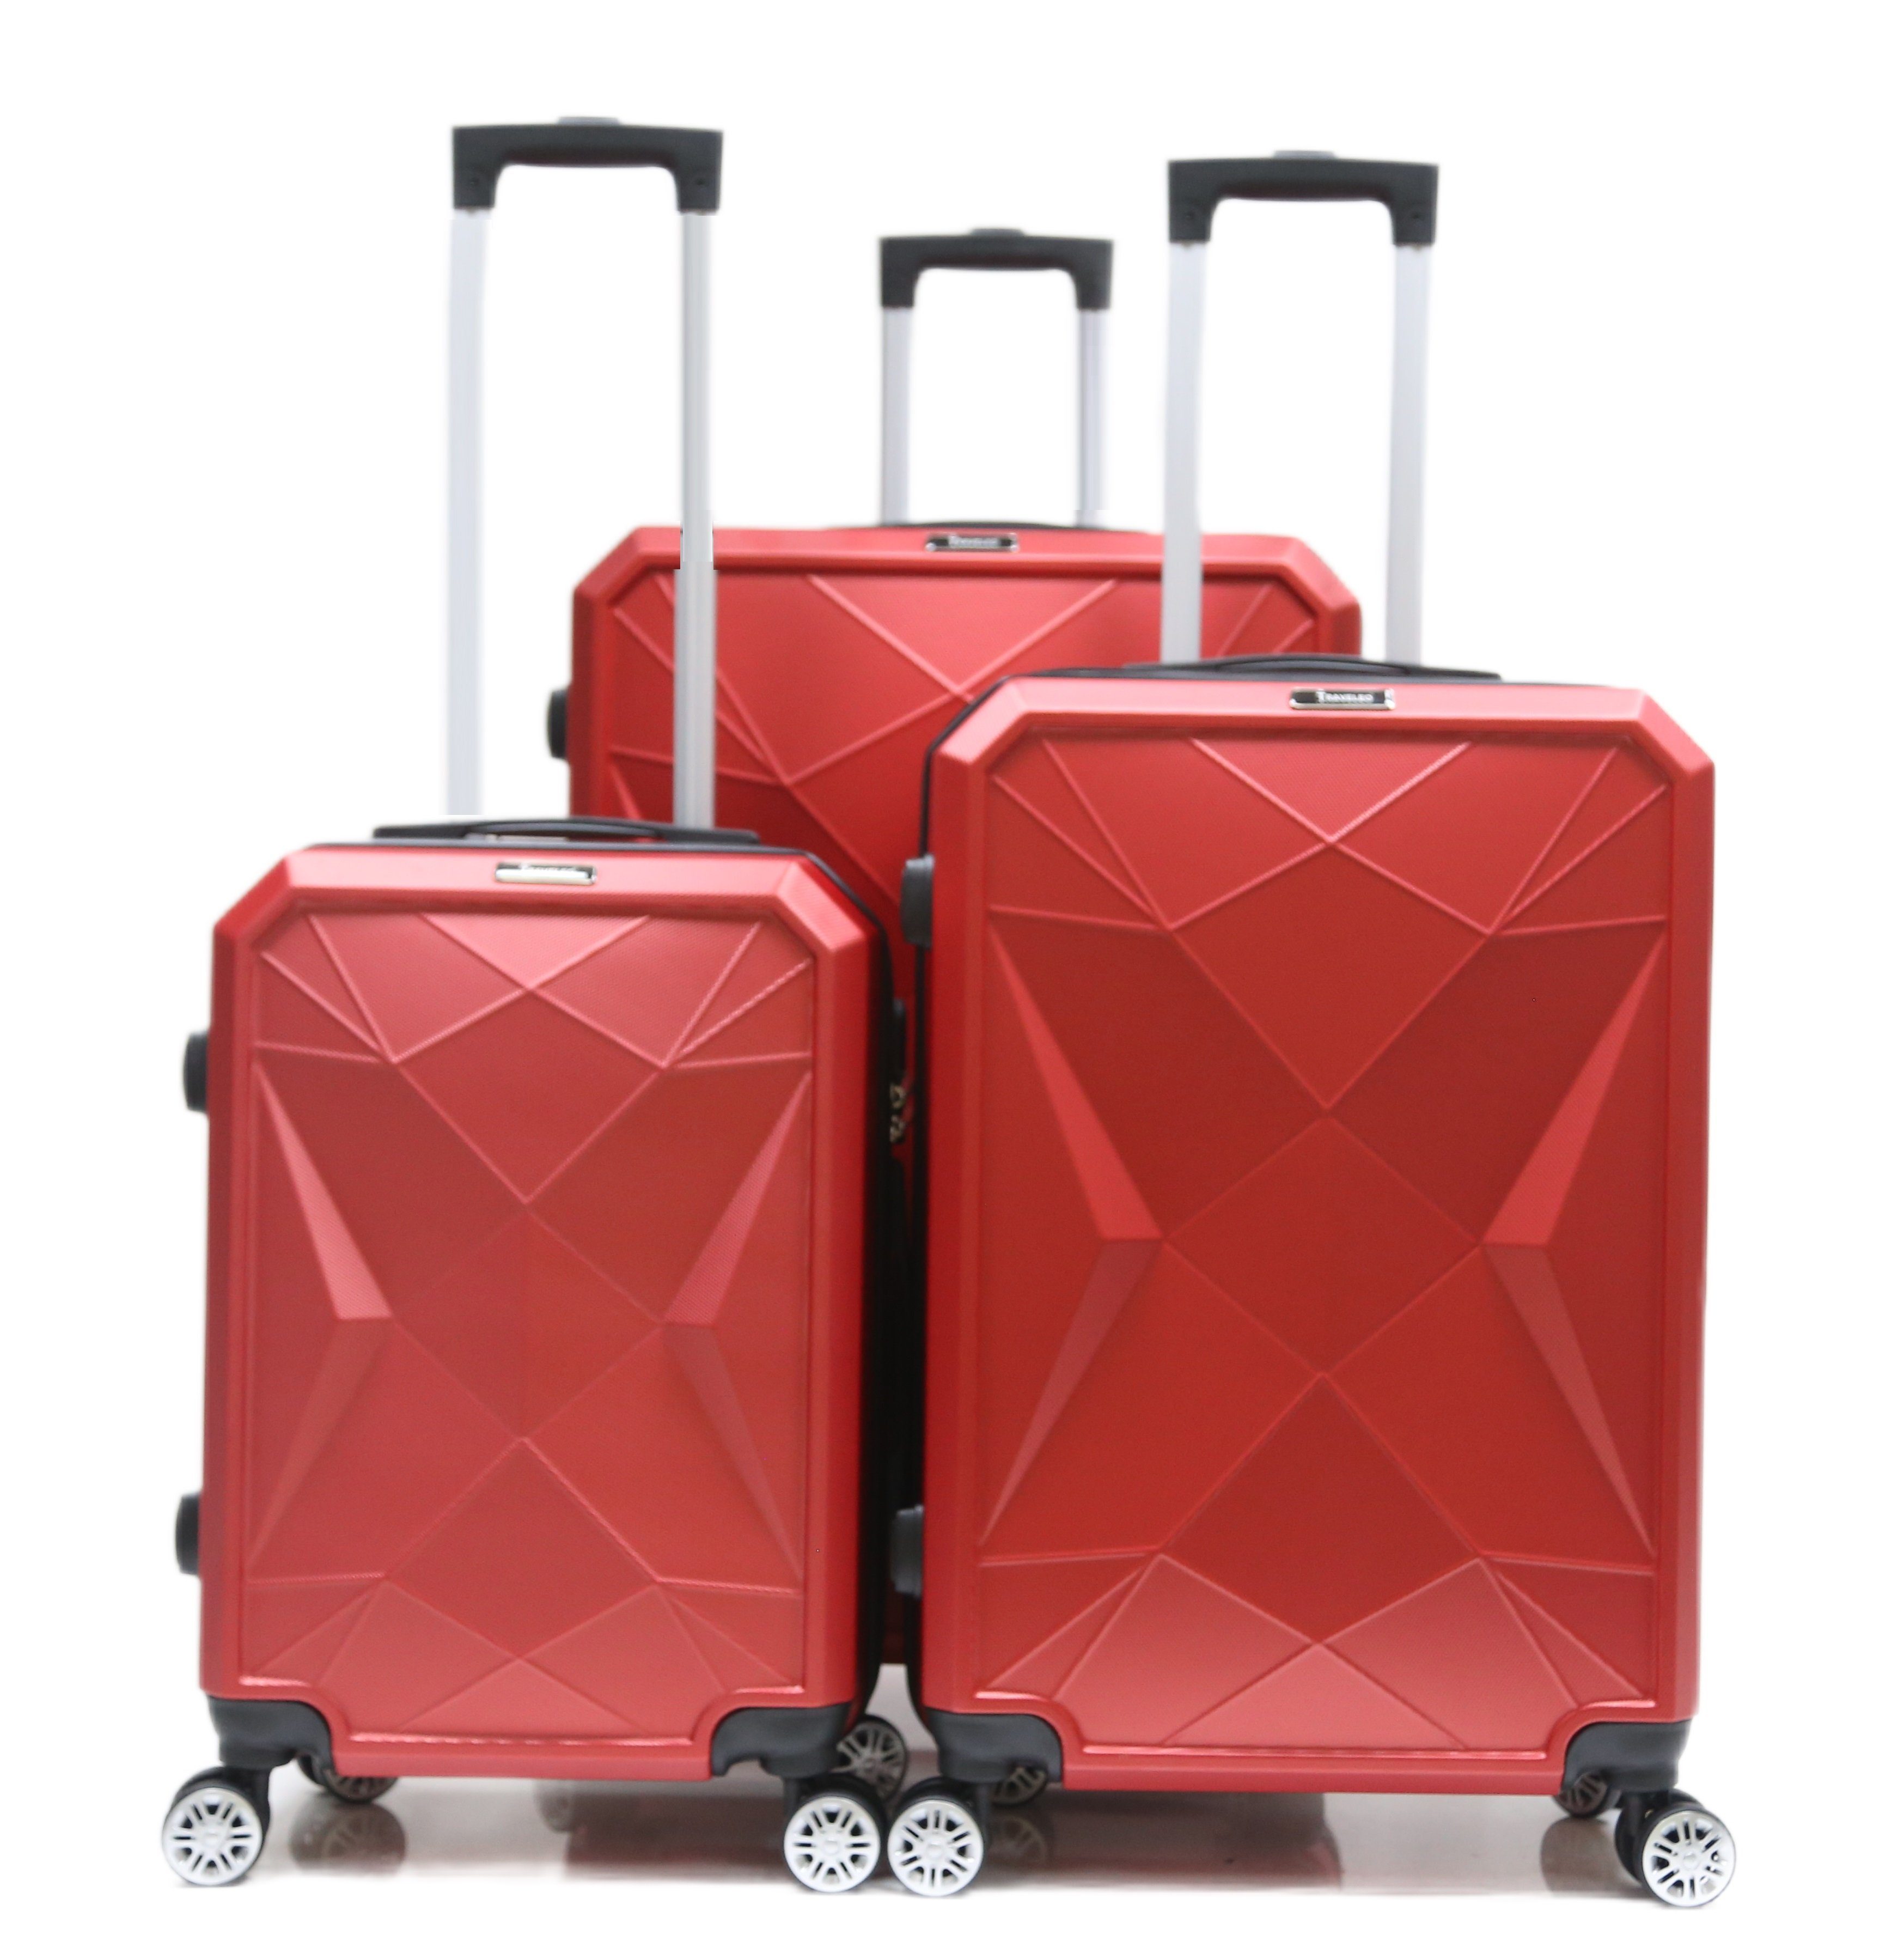 Cheffinger Kofferset Reisekoffer ABS-03 Koffer 3-teilig Hartschale Trolley Set Kofferset, 4 Rollen, (3 tlg) Rot